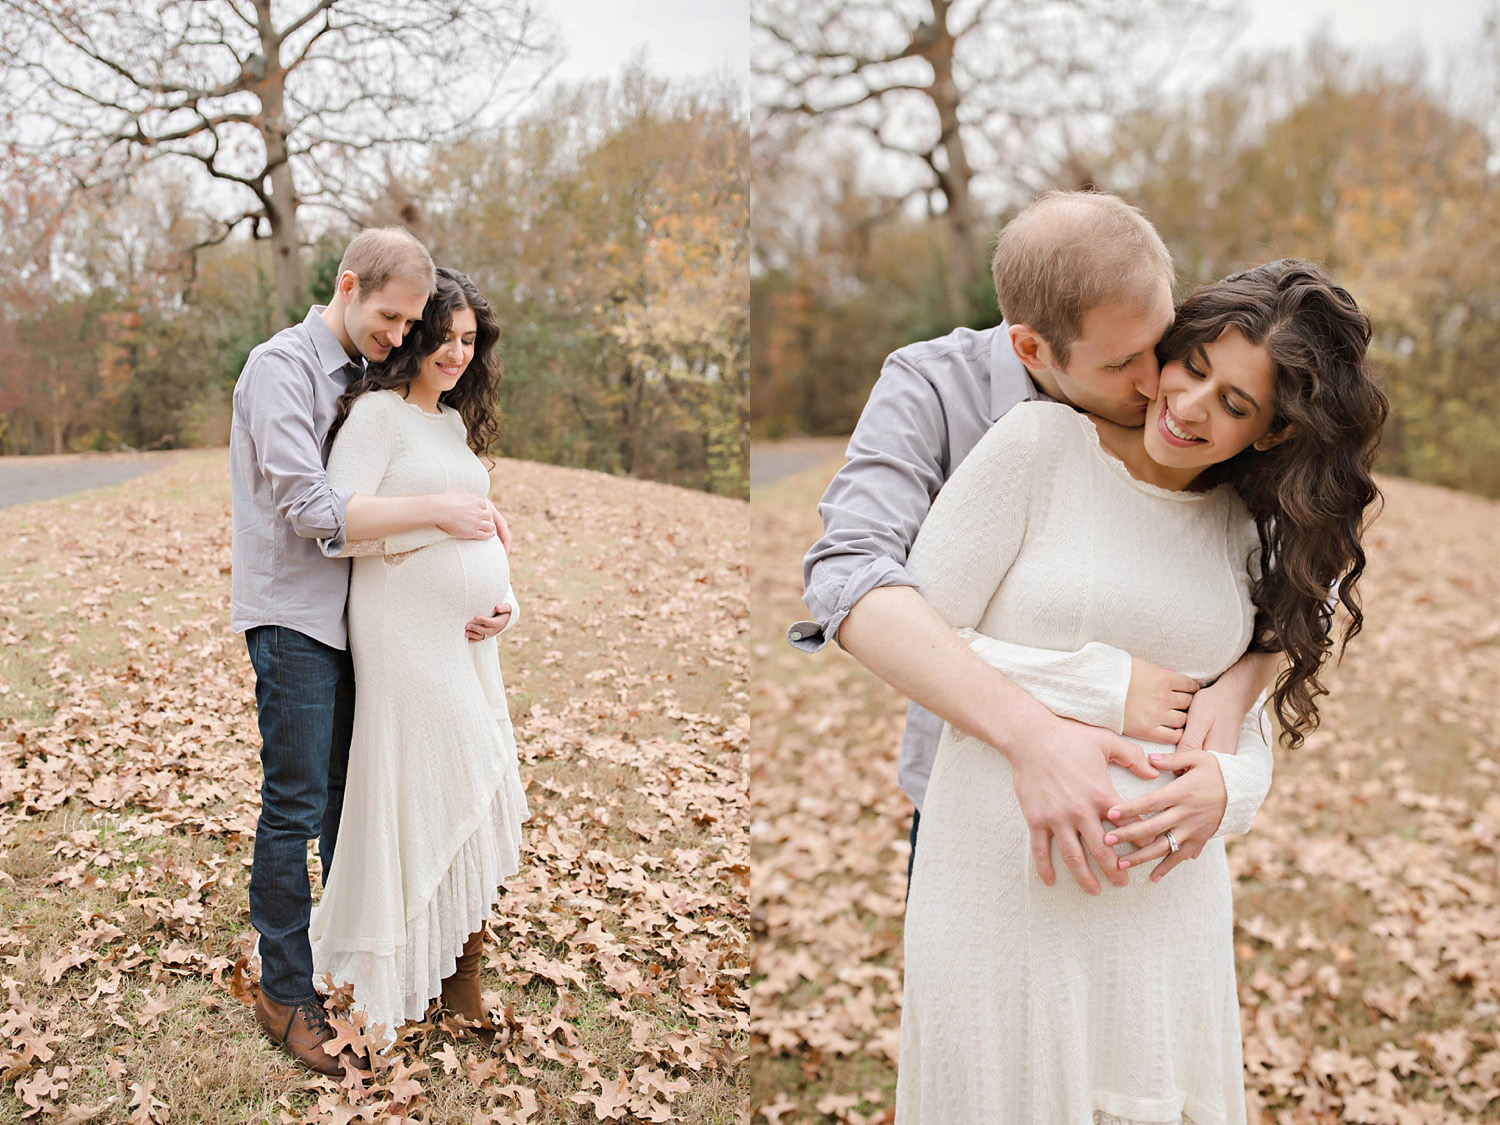 Atlanta couple embracing in park cradling pregnant belly 